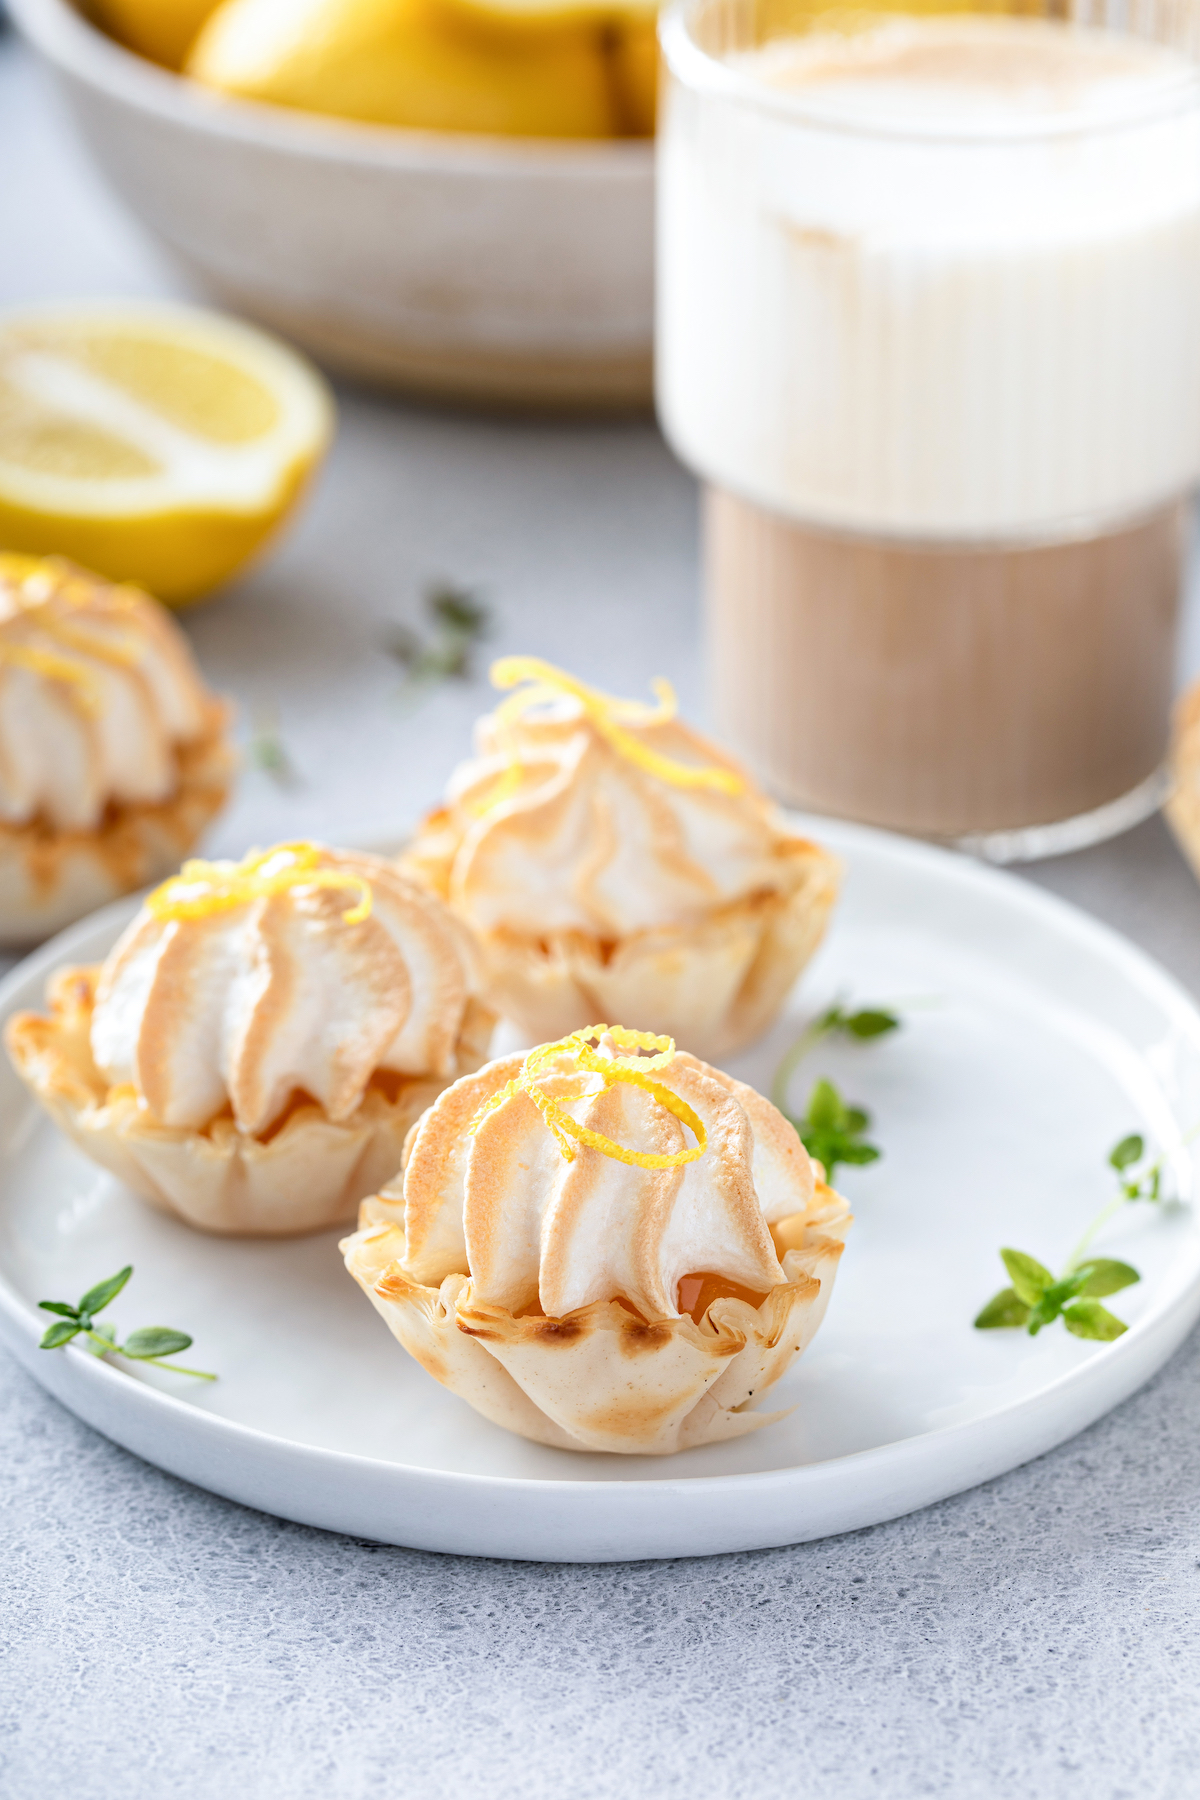 Bite-sized lemon meringue pies on a small plate.